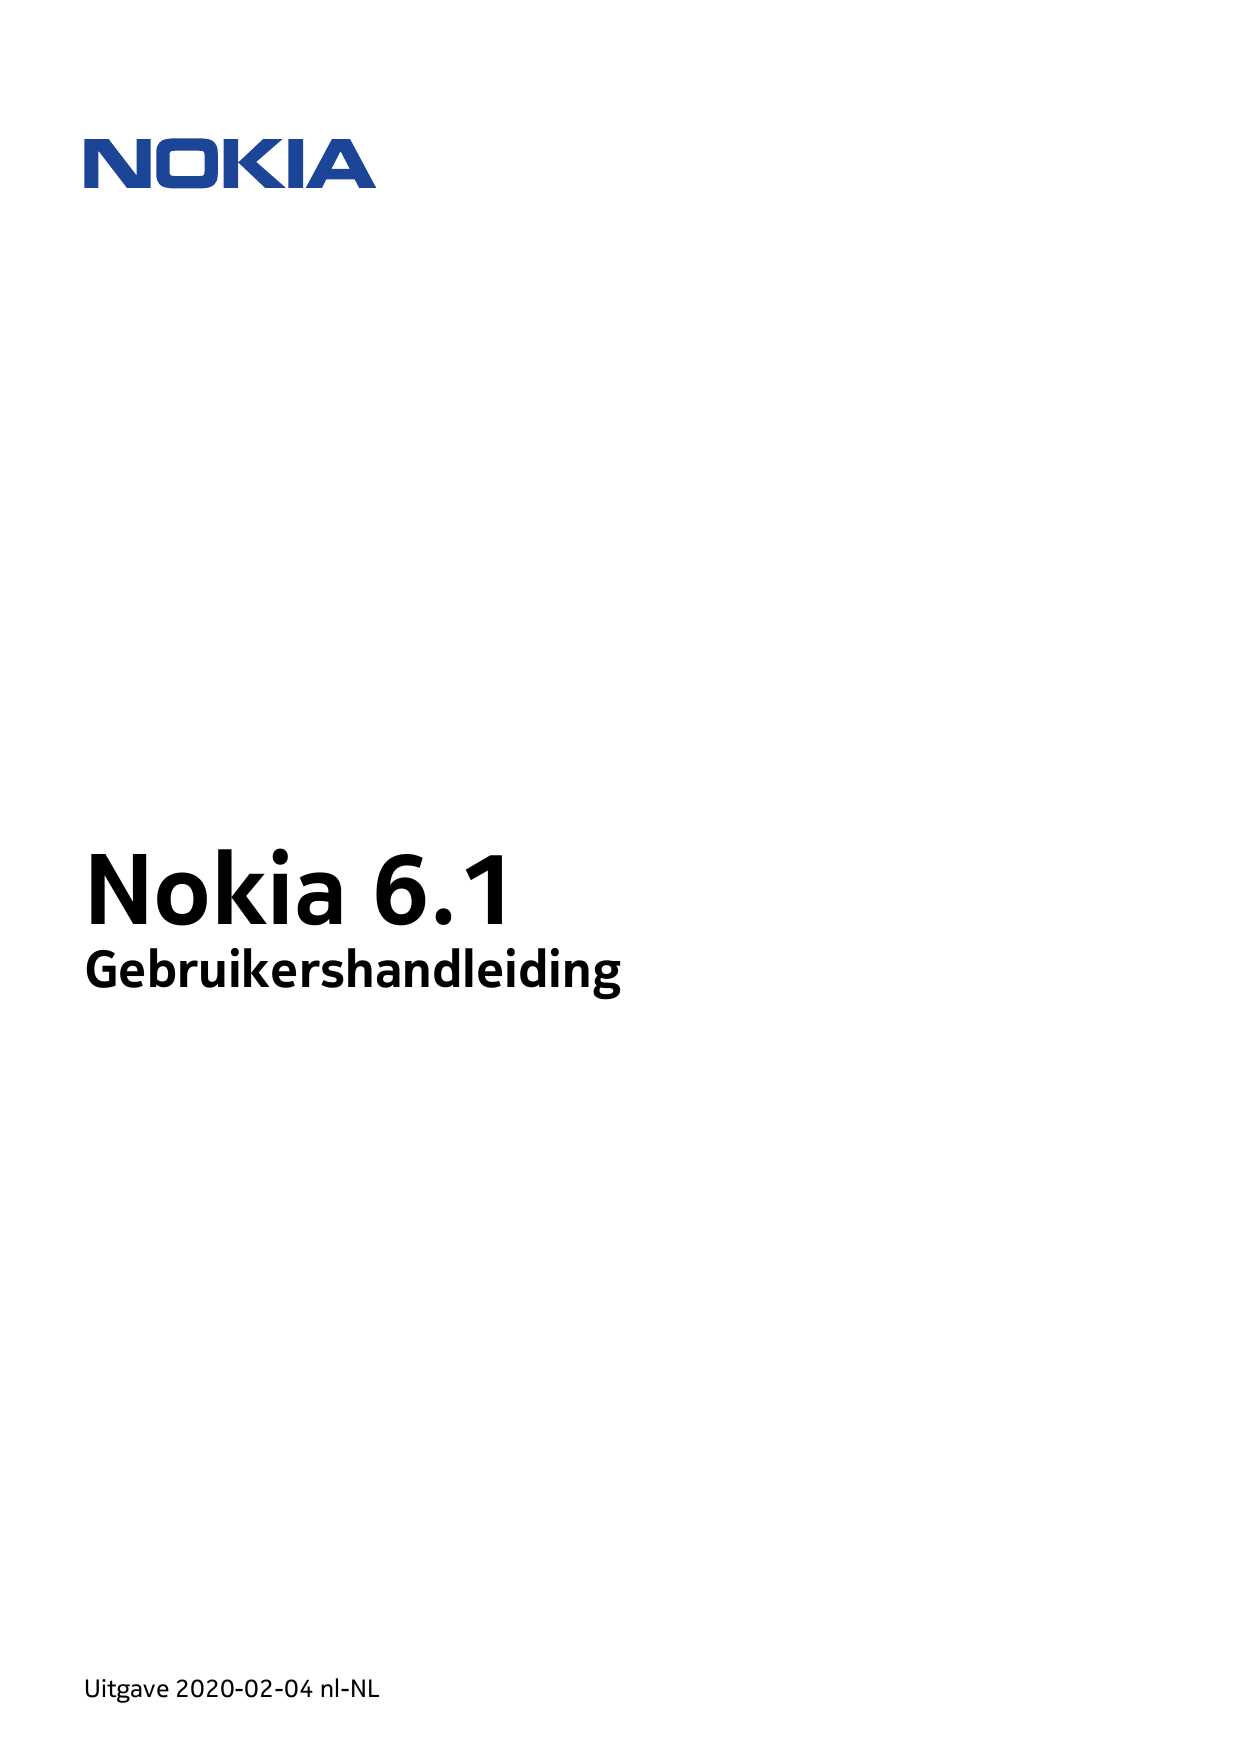 Nokia 6.1GebruikershandleidingUitgave 2020-02-04 nl-NL